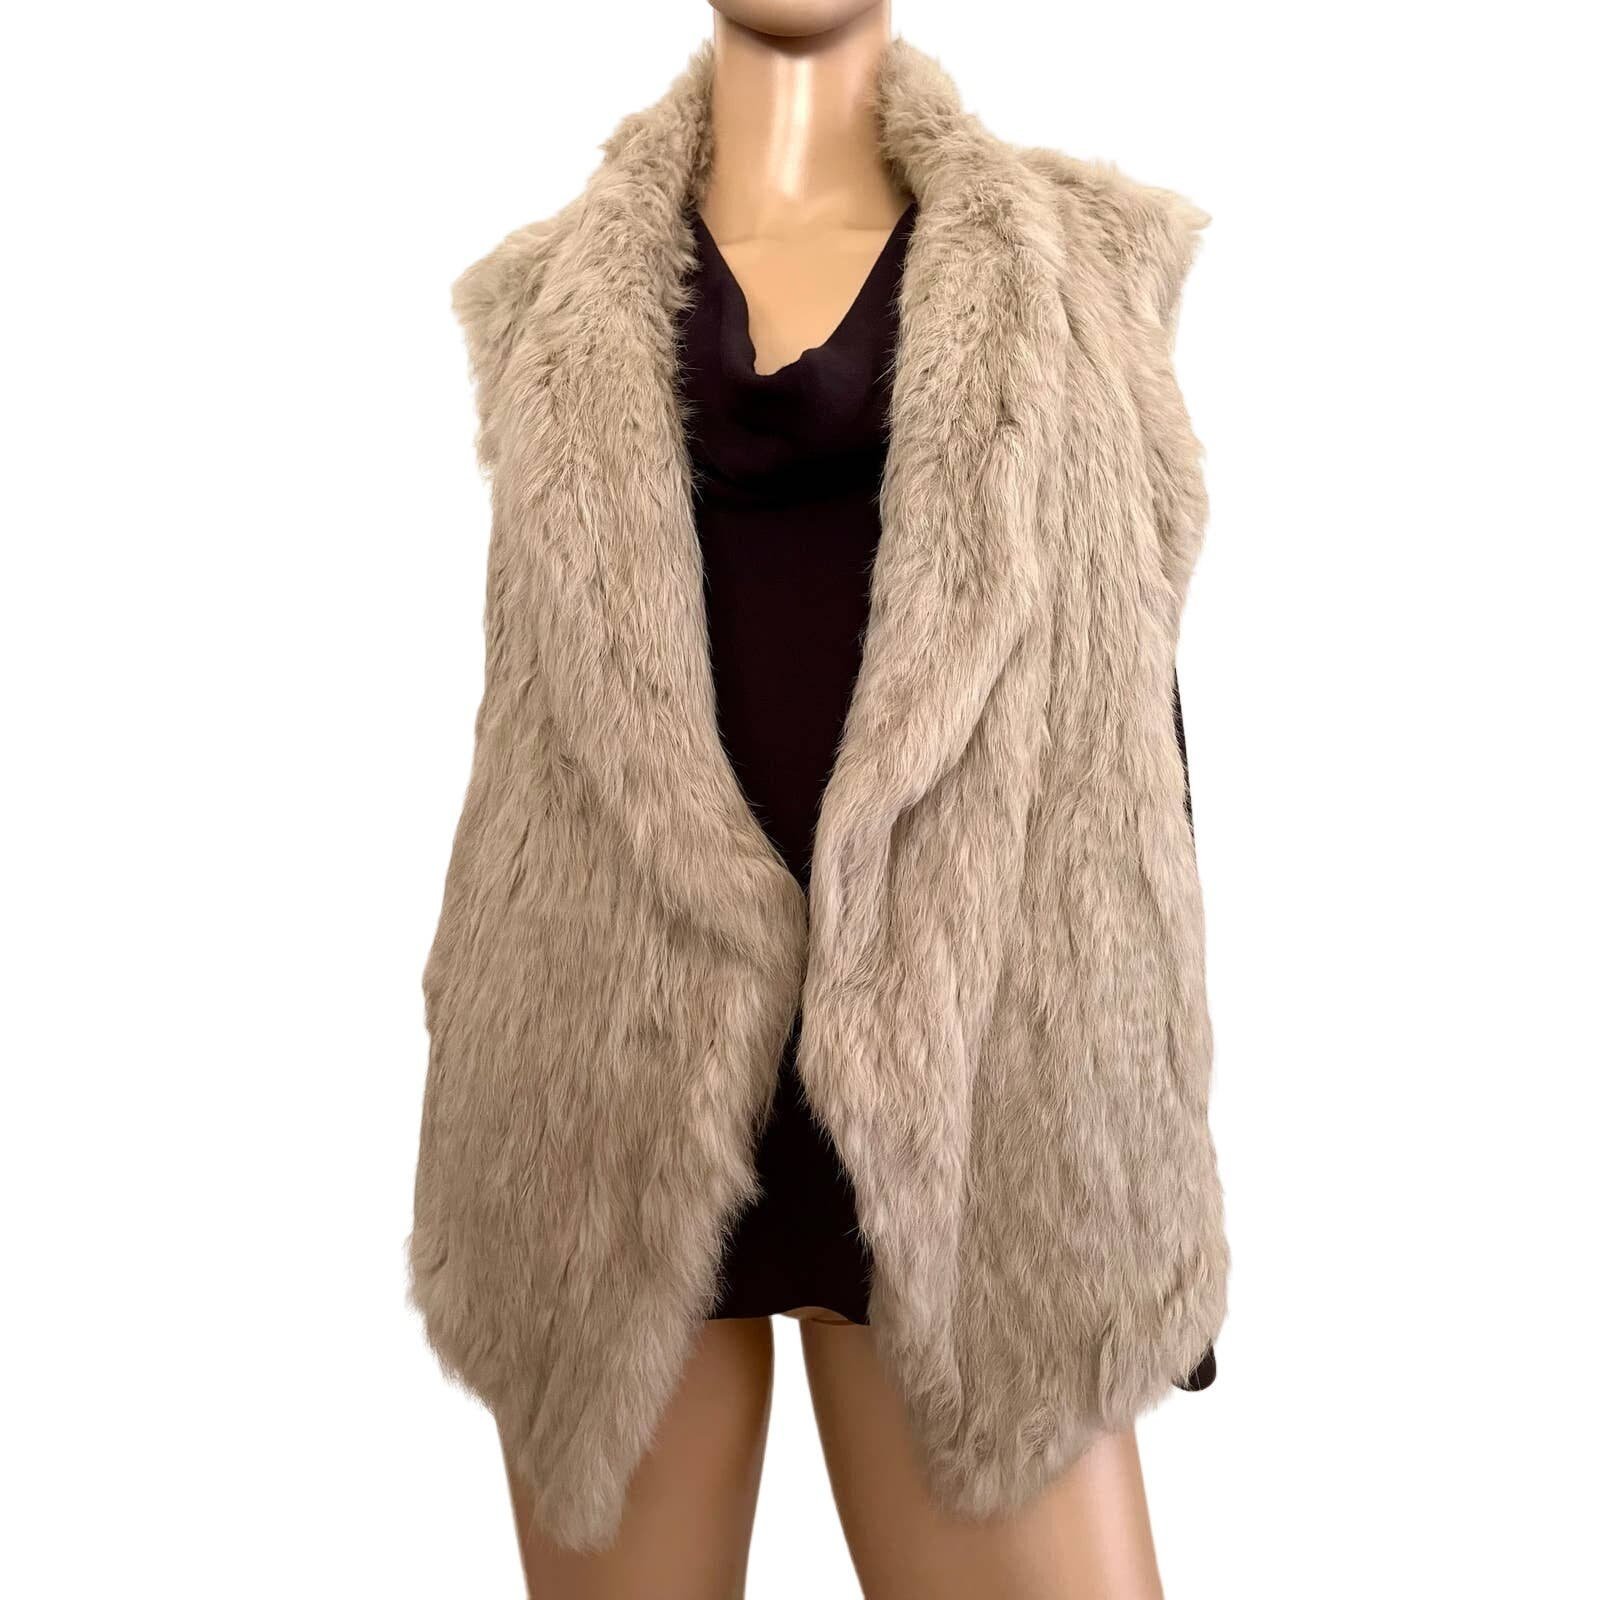 Wholesale price June Women’s Real Rabbit Soft Fur Sleeveless Vest size L PopmlnOWa Buying Cheap